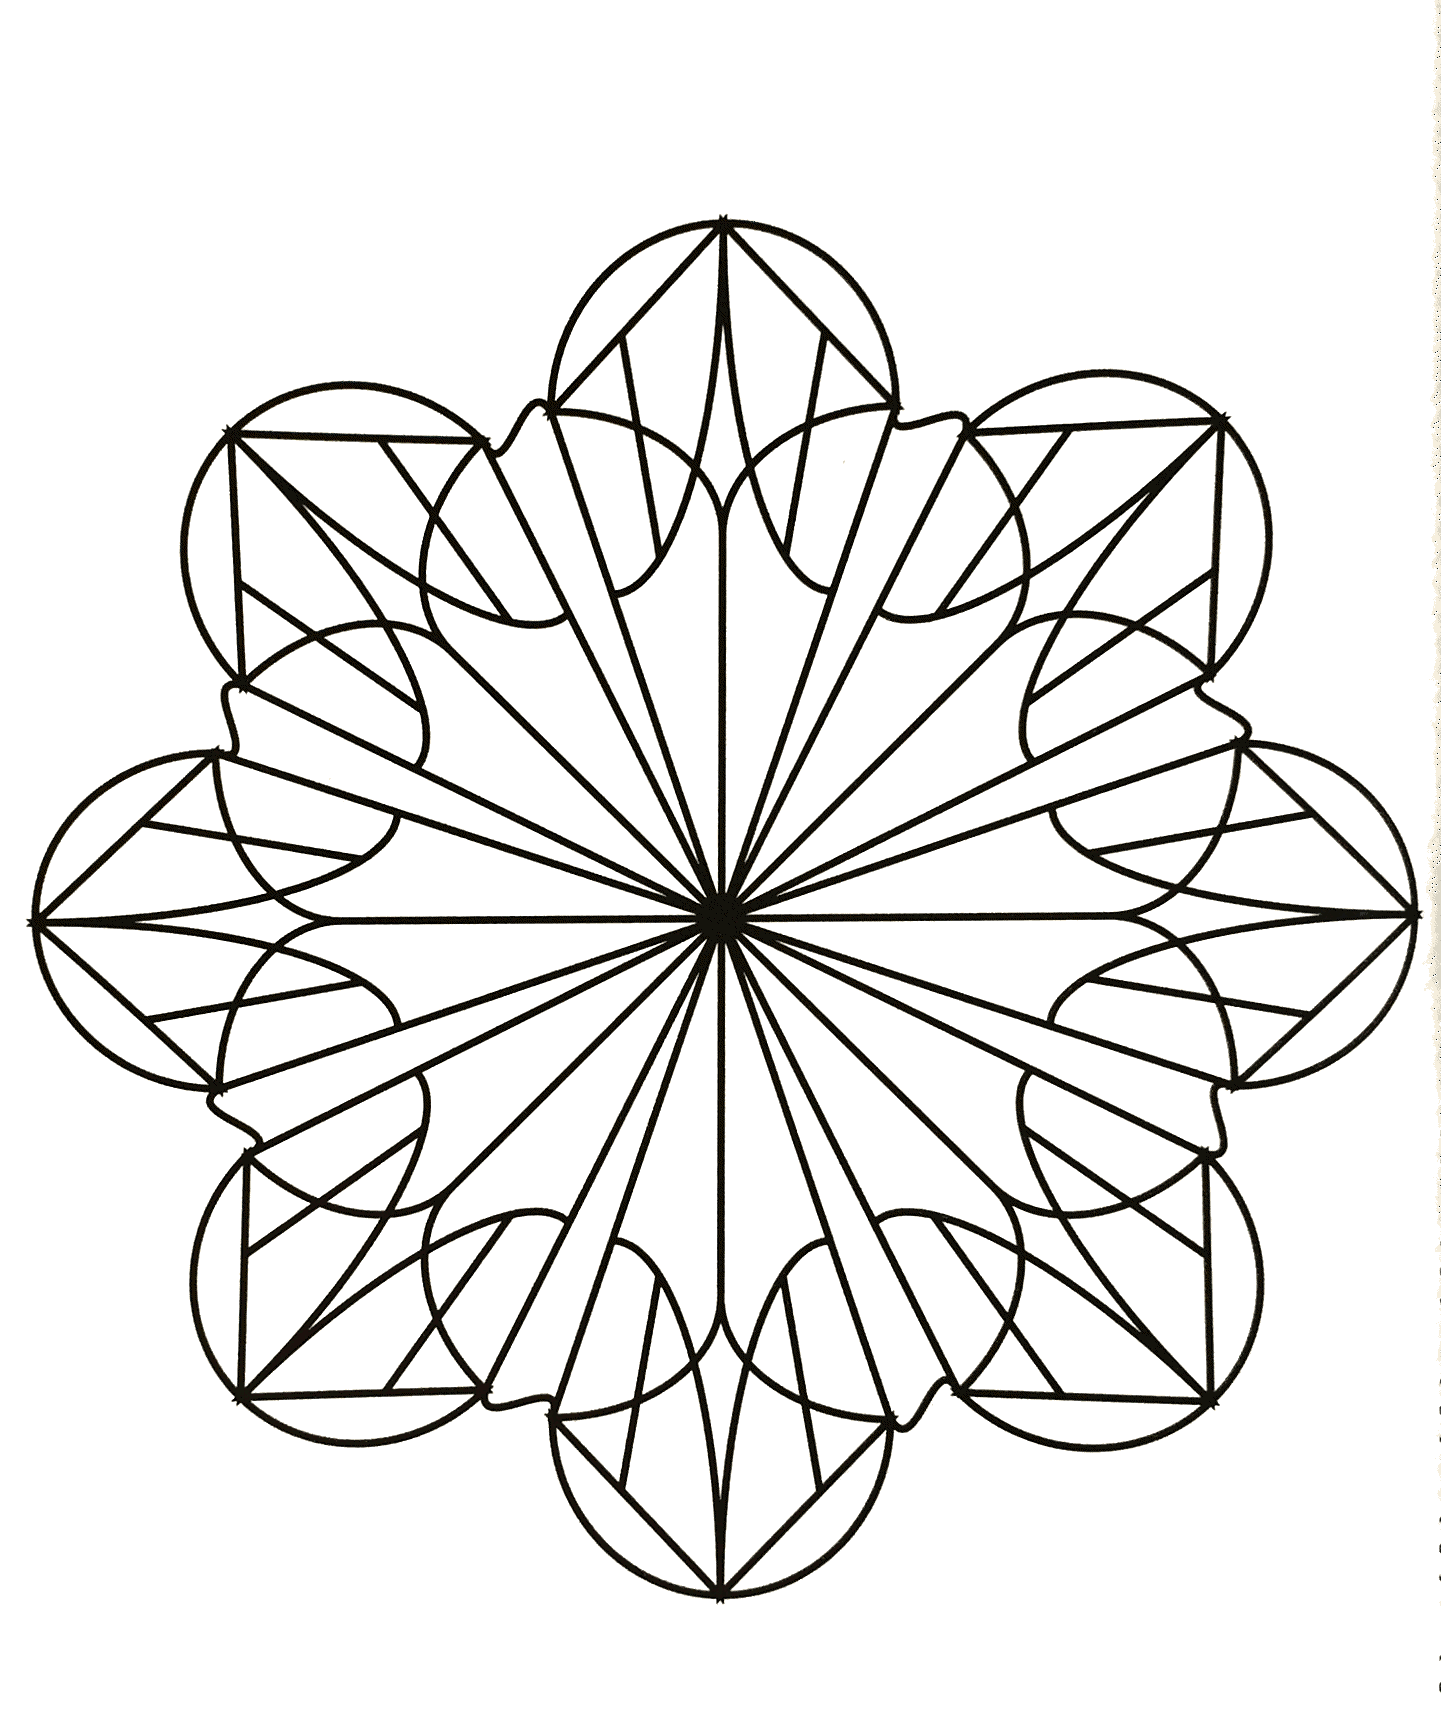 Simple Mandalas coloring page